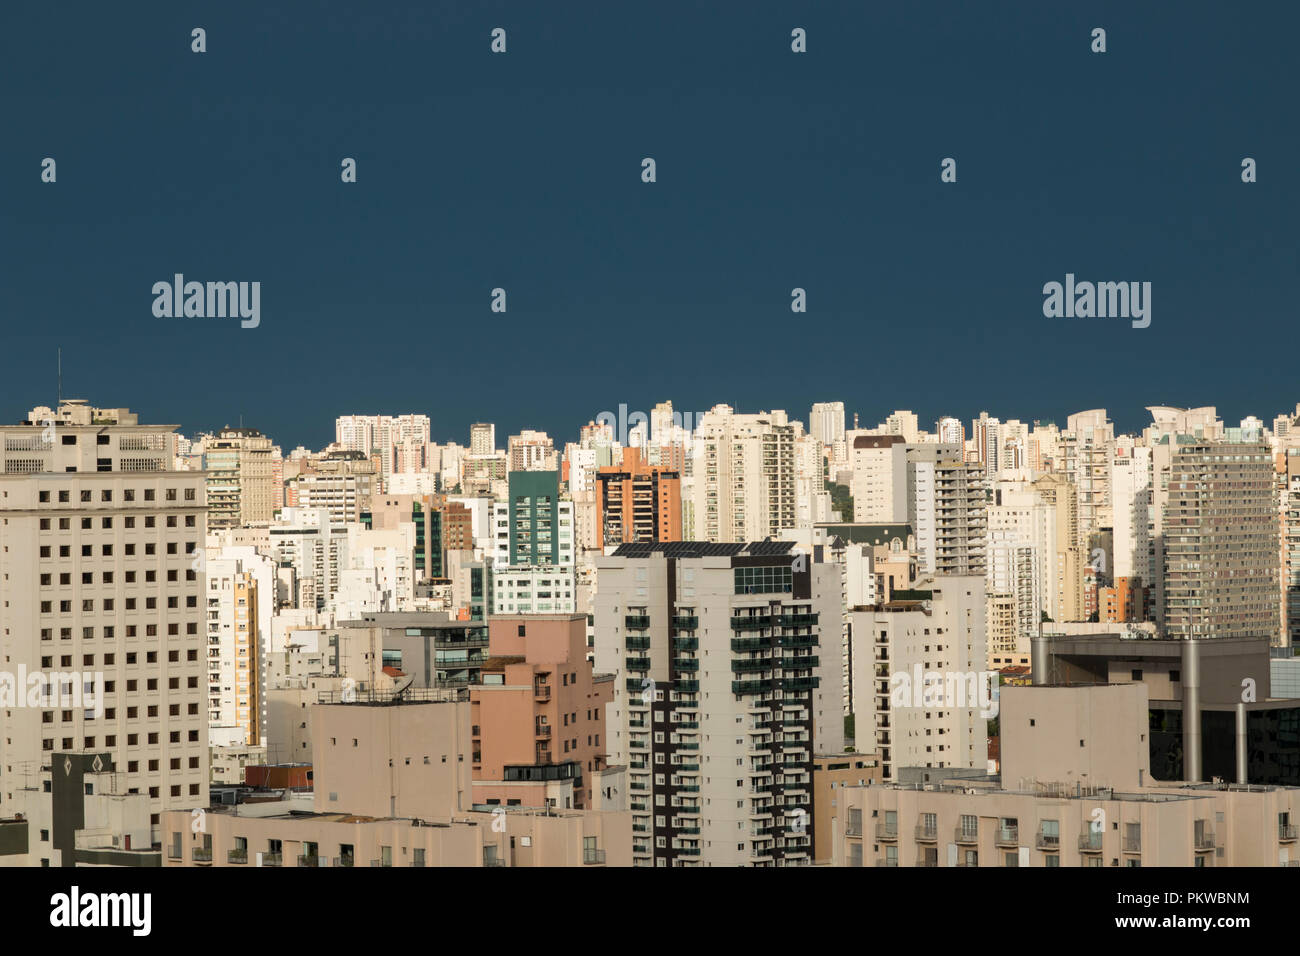 Big city, building, and blue sky. Stock Photo